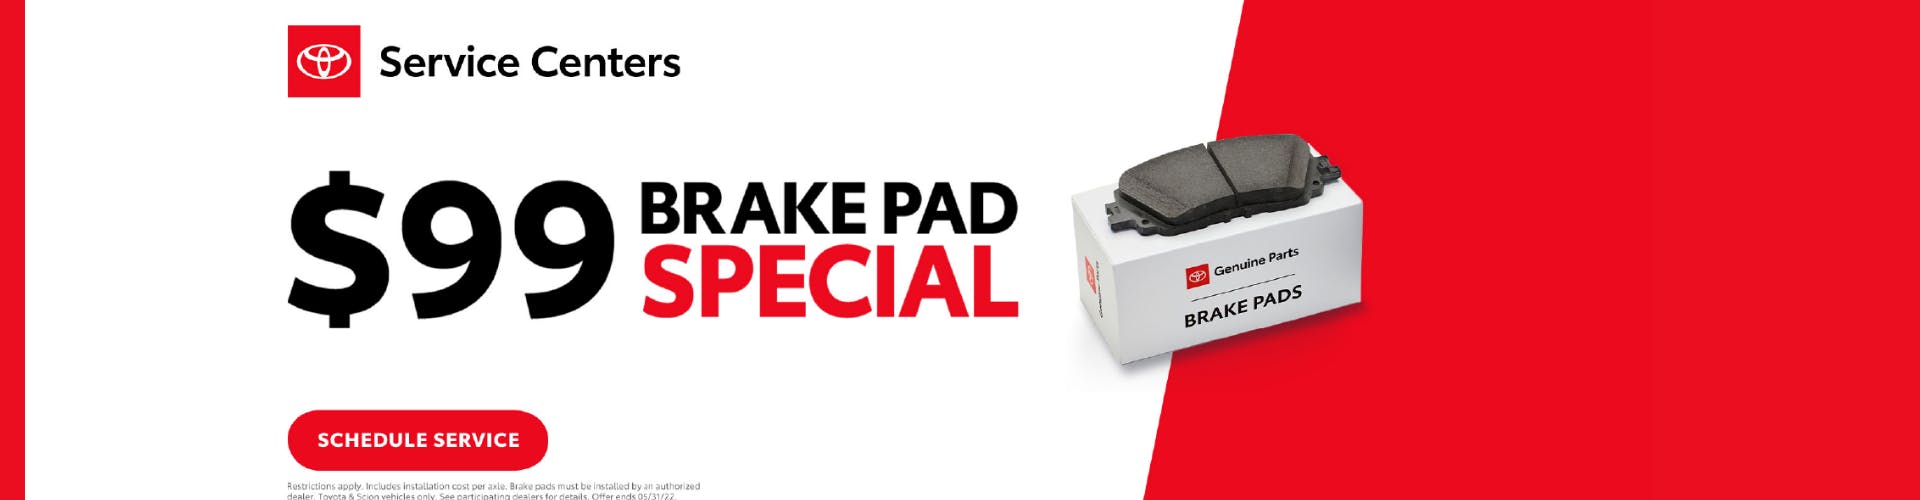 $99 Brake Pad Special